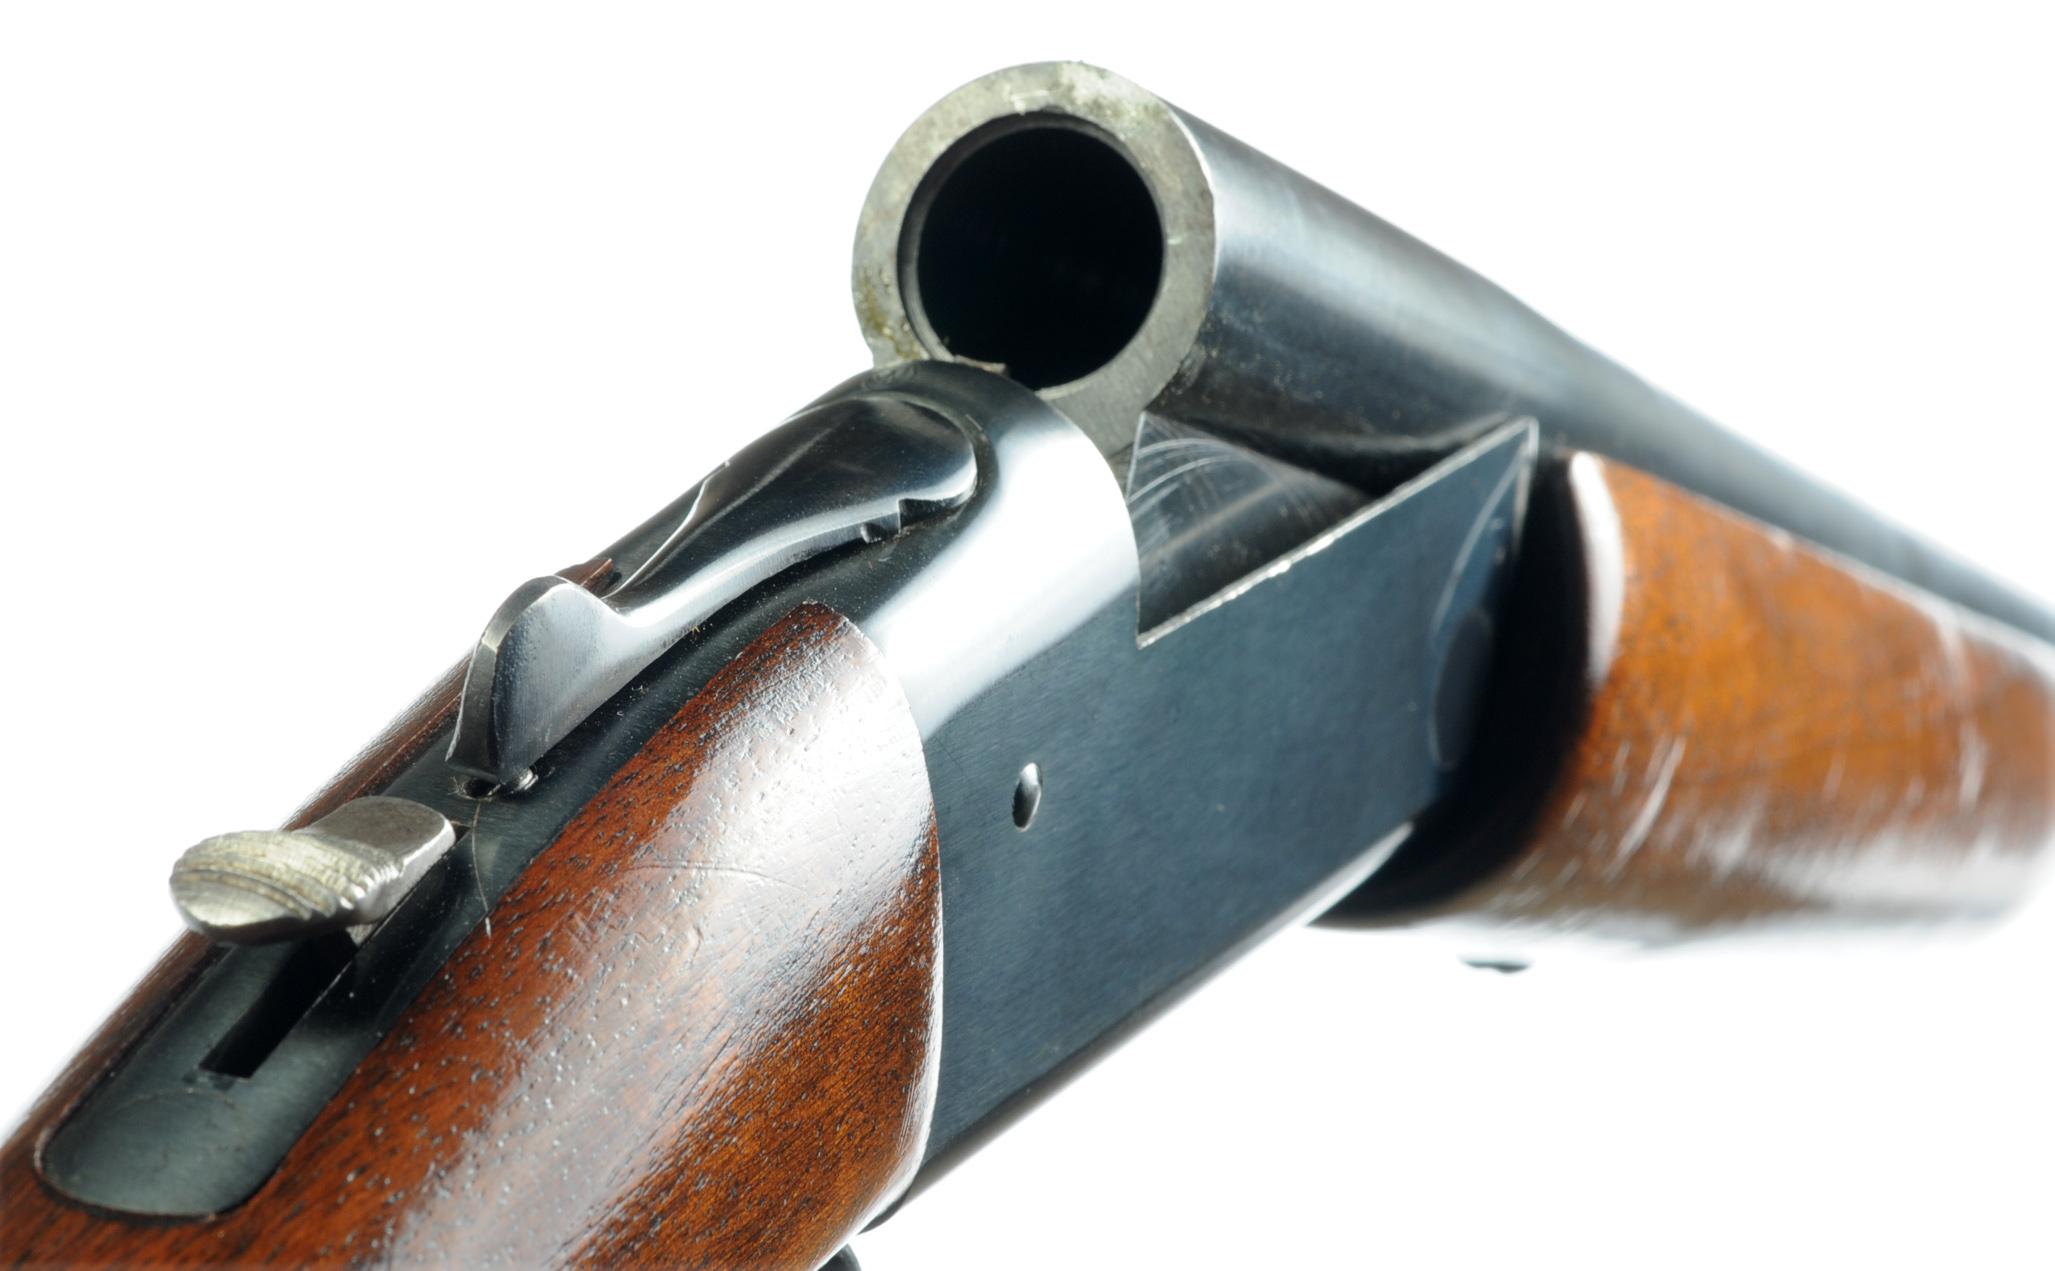 Winchester Model 37 20GA Single shot Shotgun.  FFL # NSN (LAM 1)